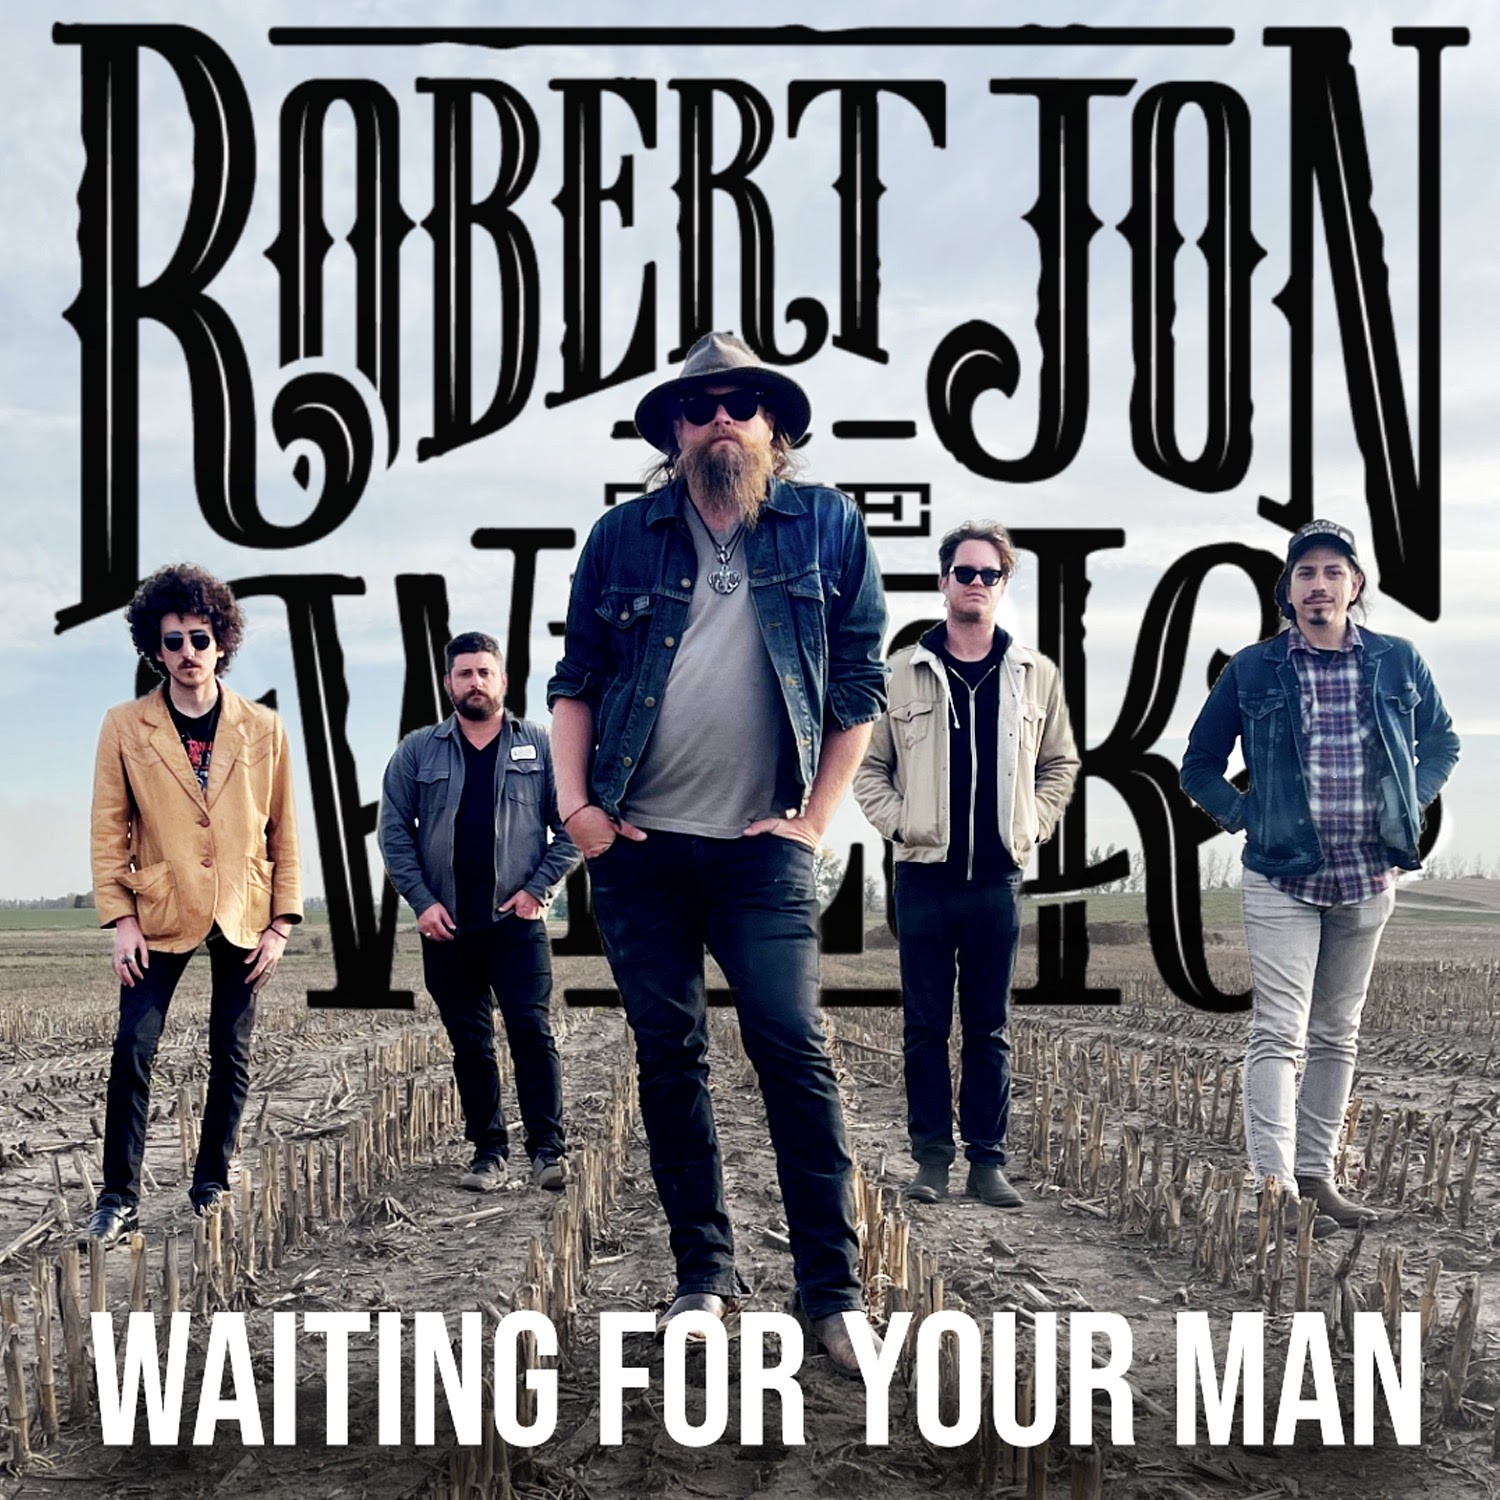 Robert Jon & The Wreck - Waiting For Your Man